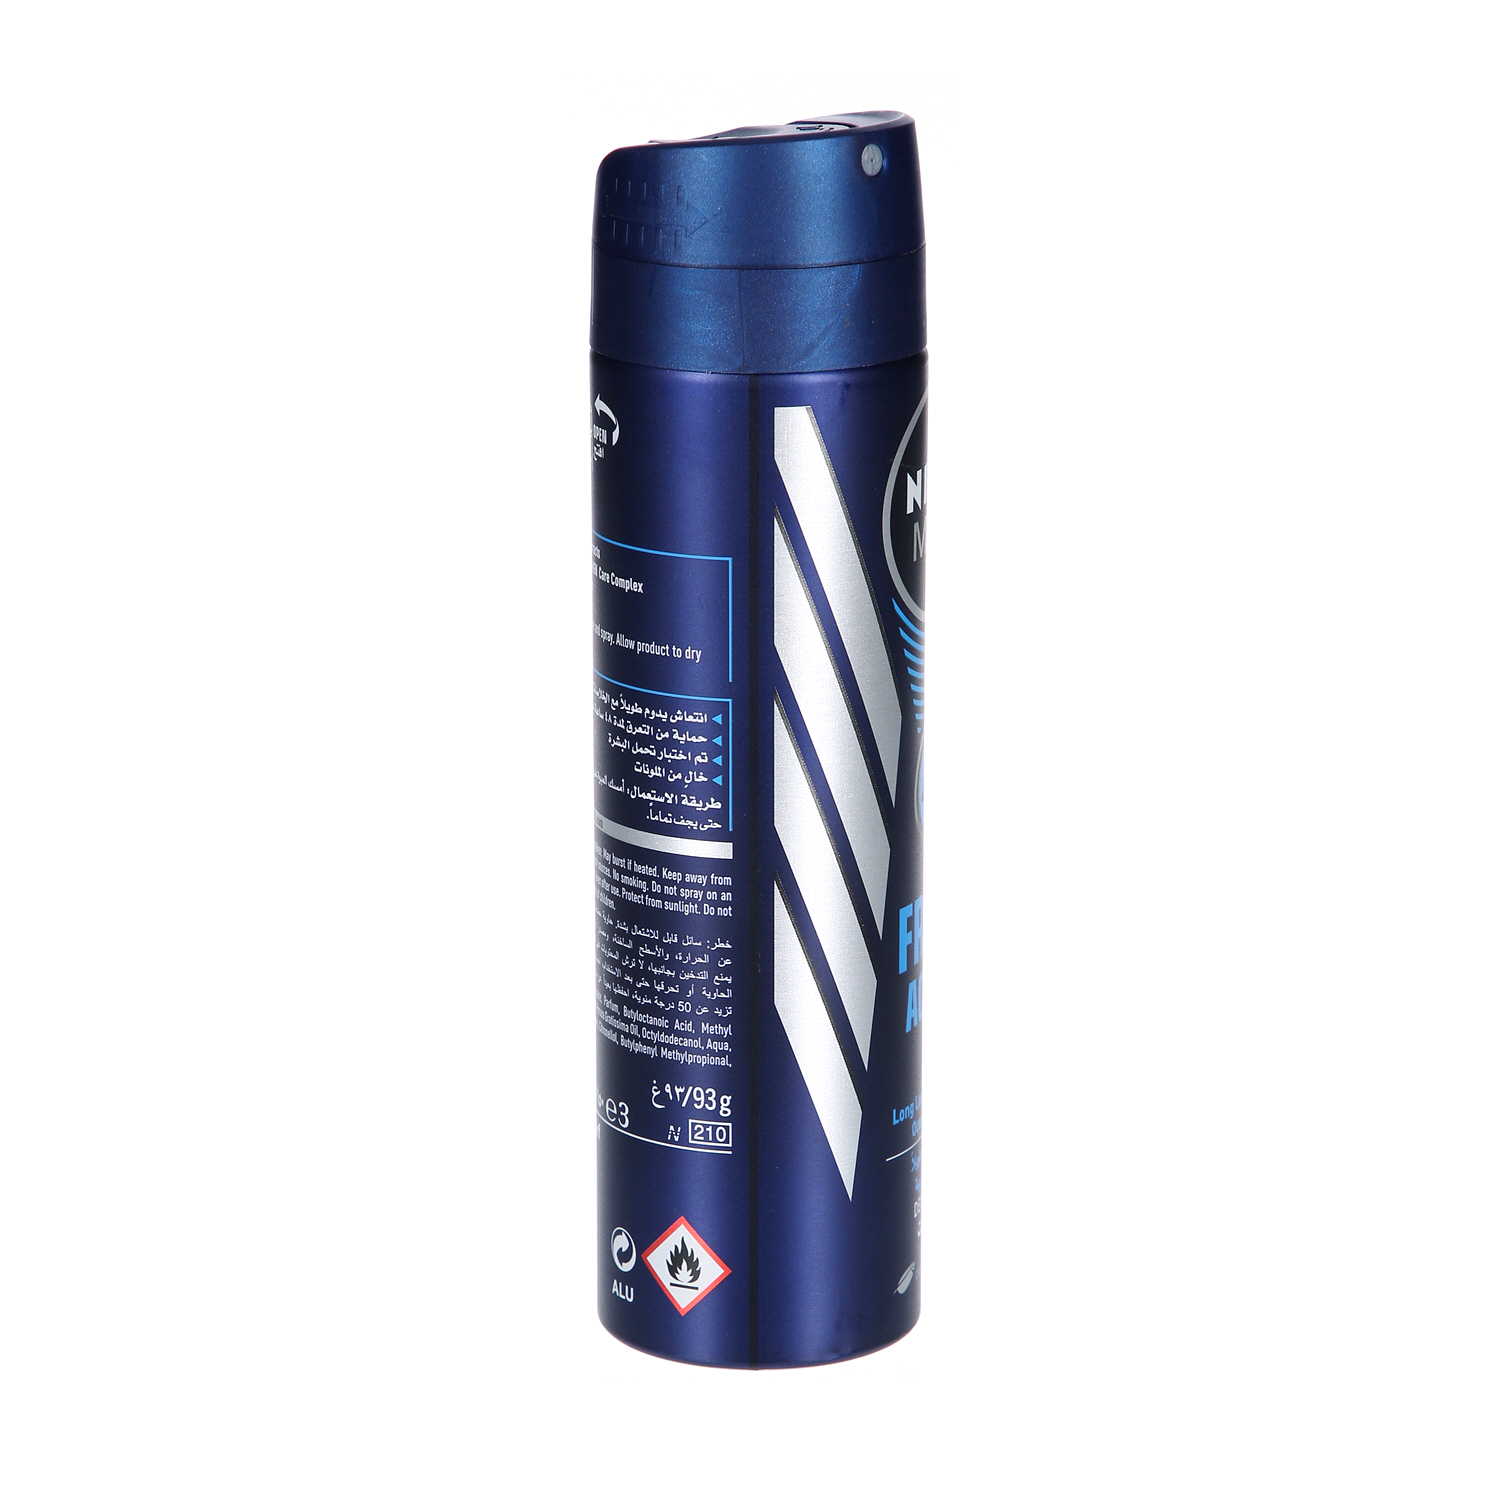 Nivea Men Antiperspirant Spray for Men Fresh Active Fresh Scent 150 ml